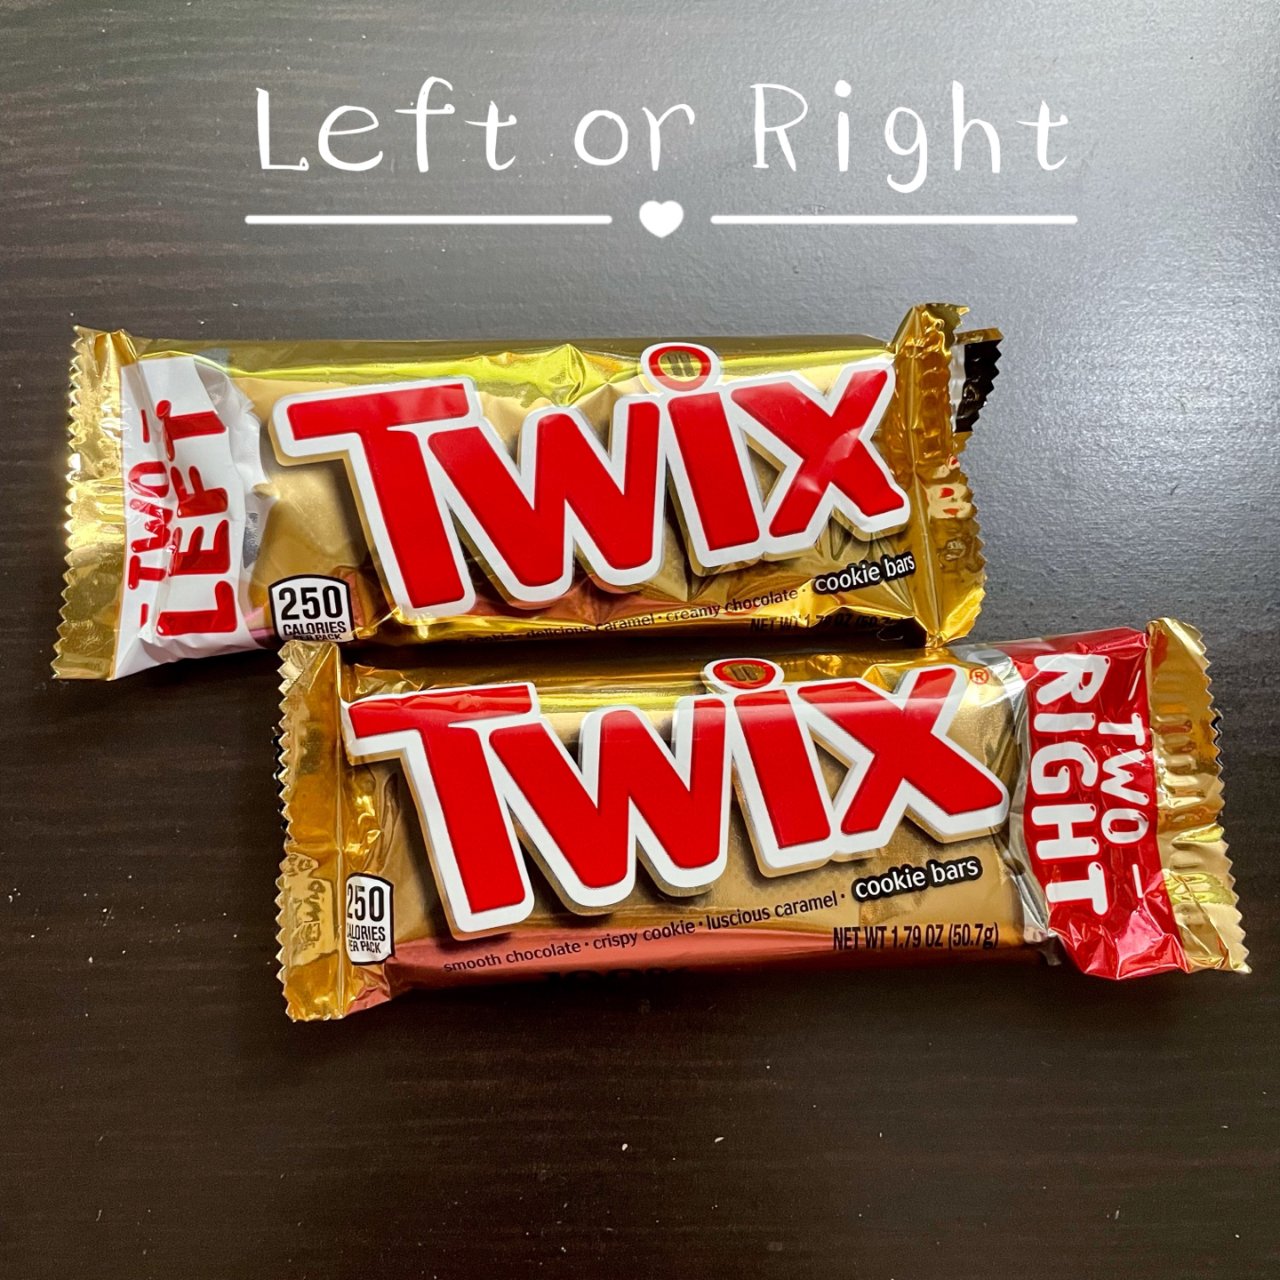 Twix｜Left or Right ·...